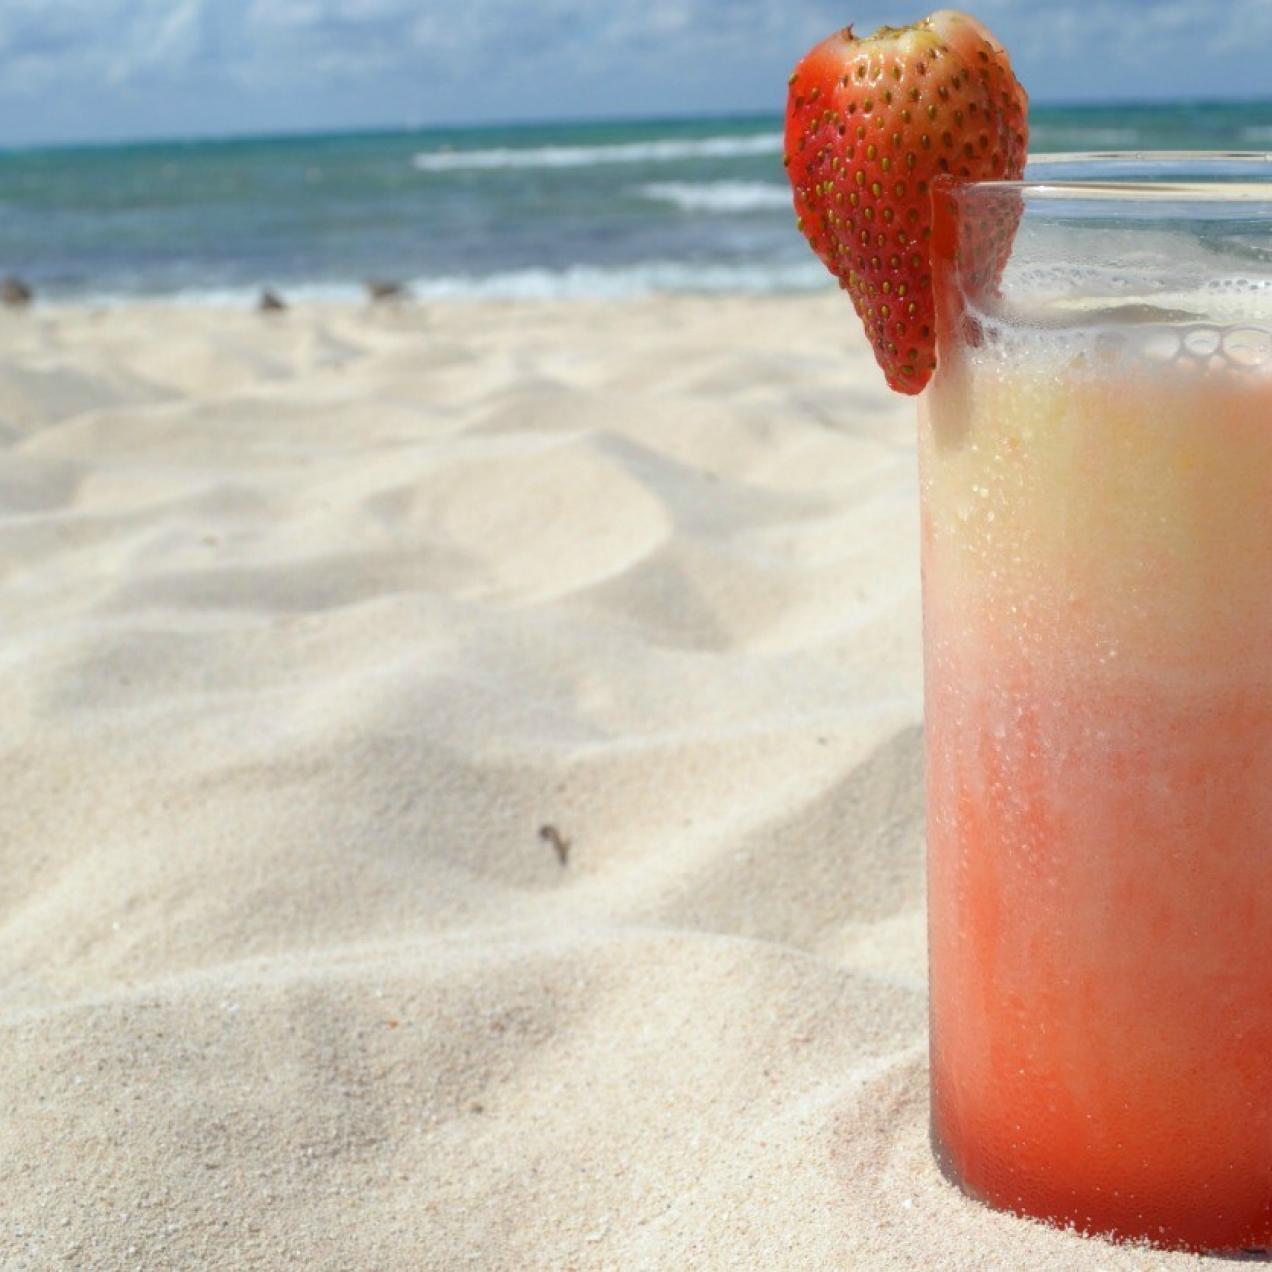 Sandos Cocktail Week Day 3: “Miami Vice”